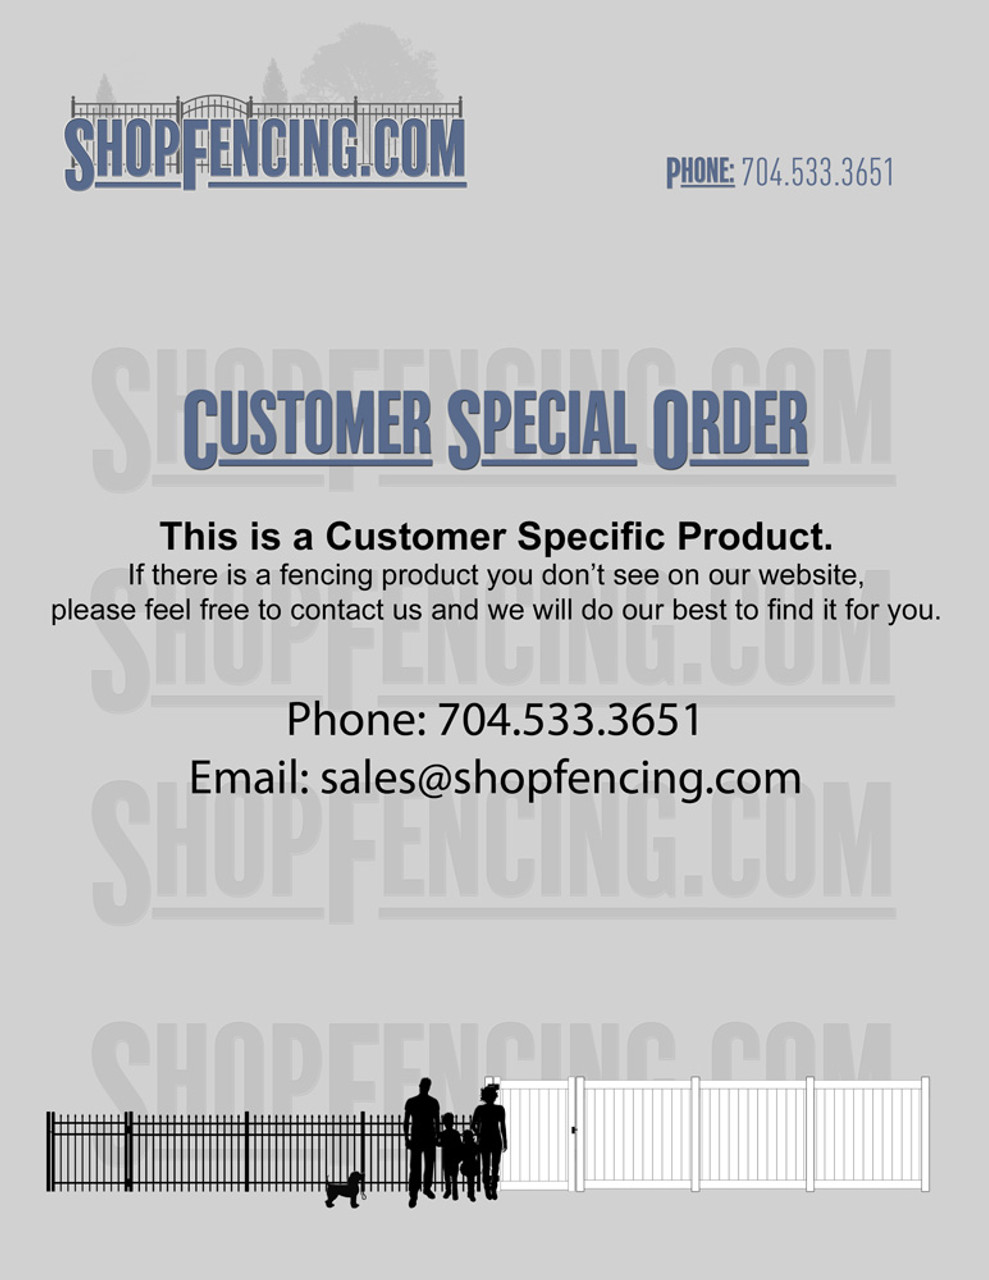 ShopFencing.com Customer Special Order